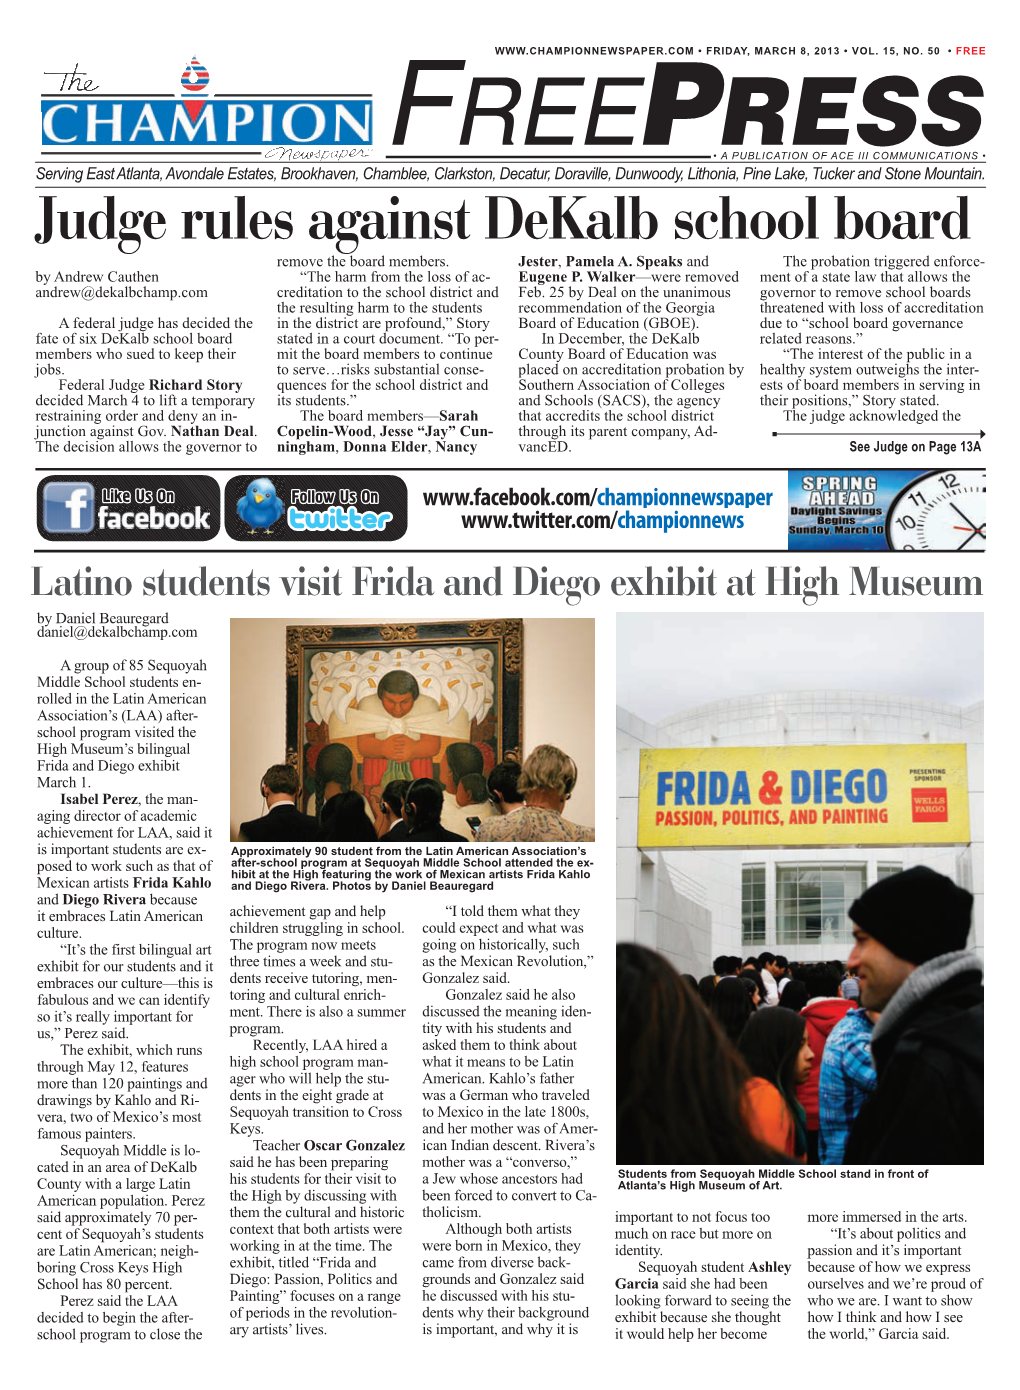 Judge Rules Against Dekalb School Board Remove the Board Members